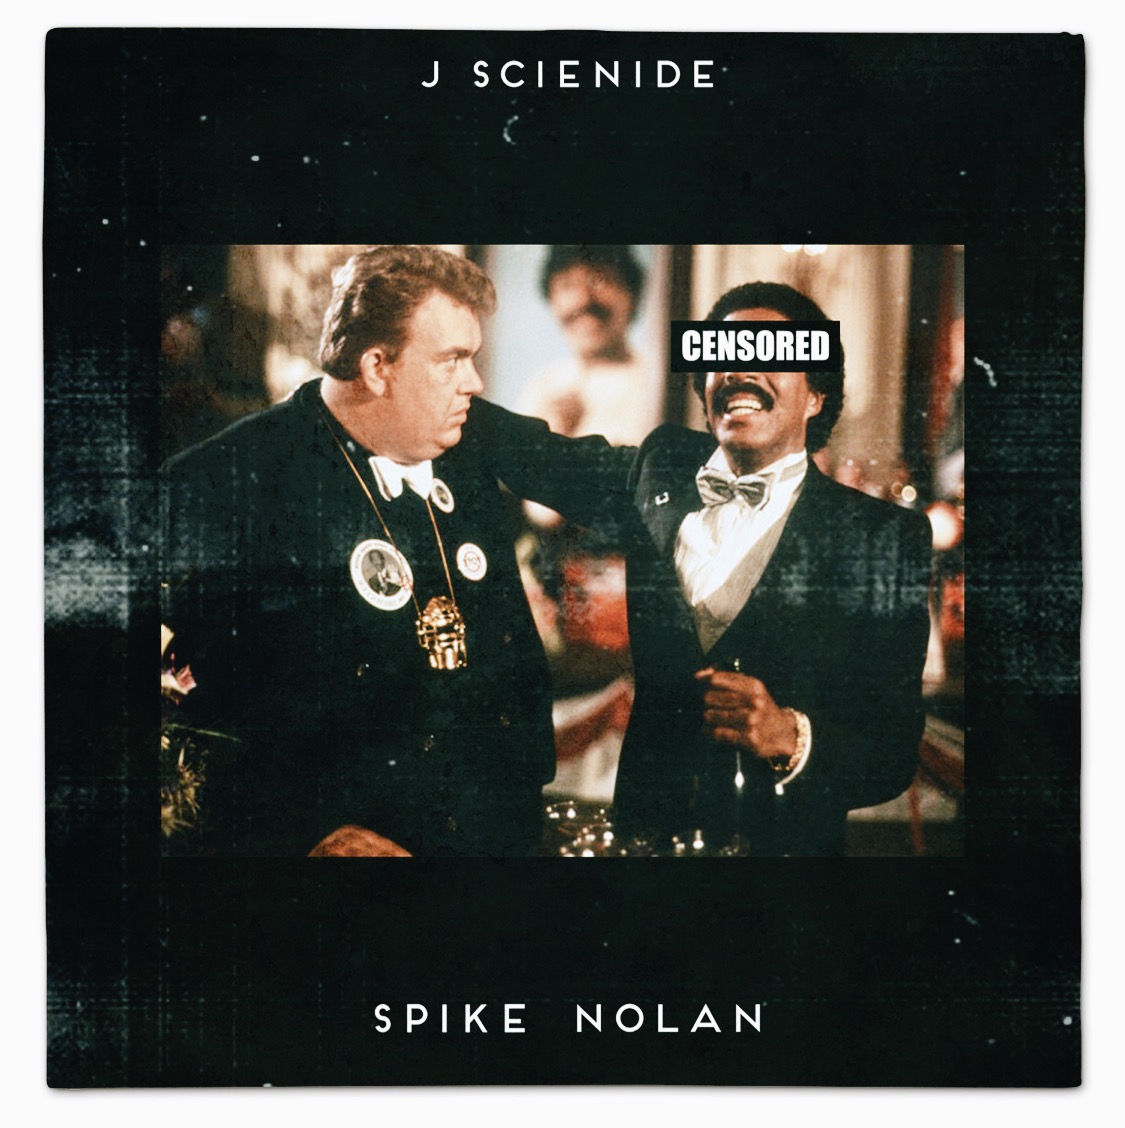 J Scienide — “Spike Nolan”